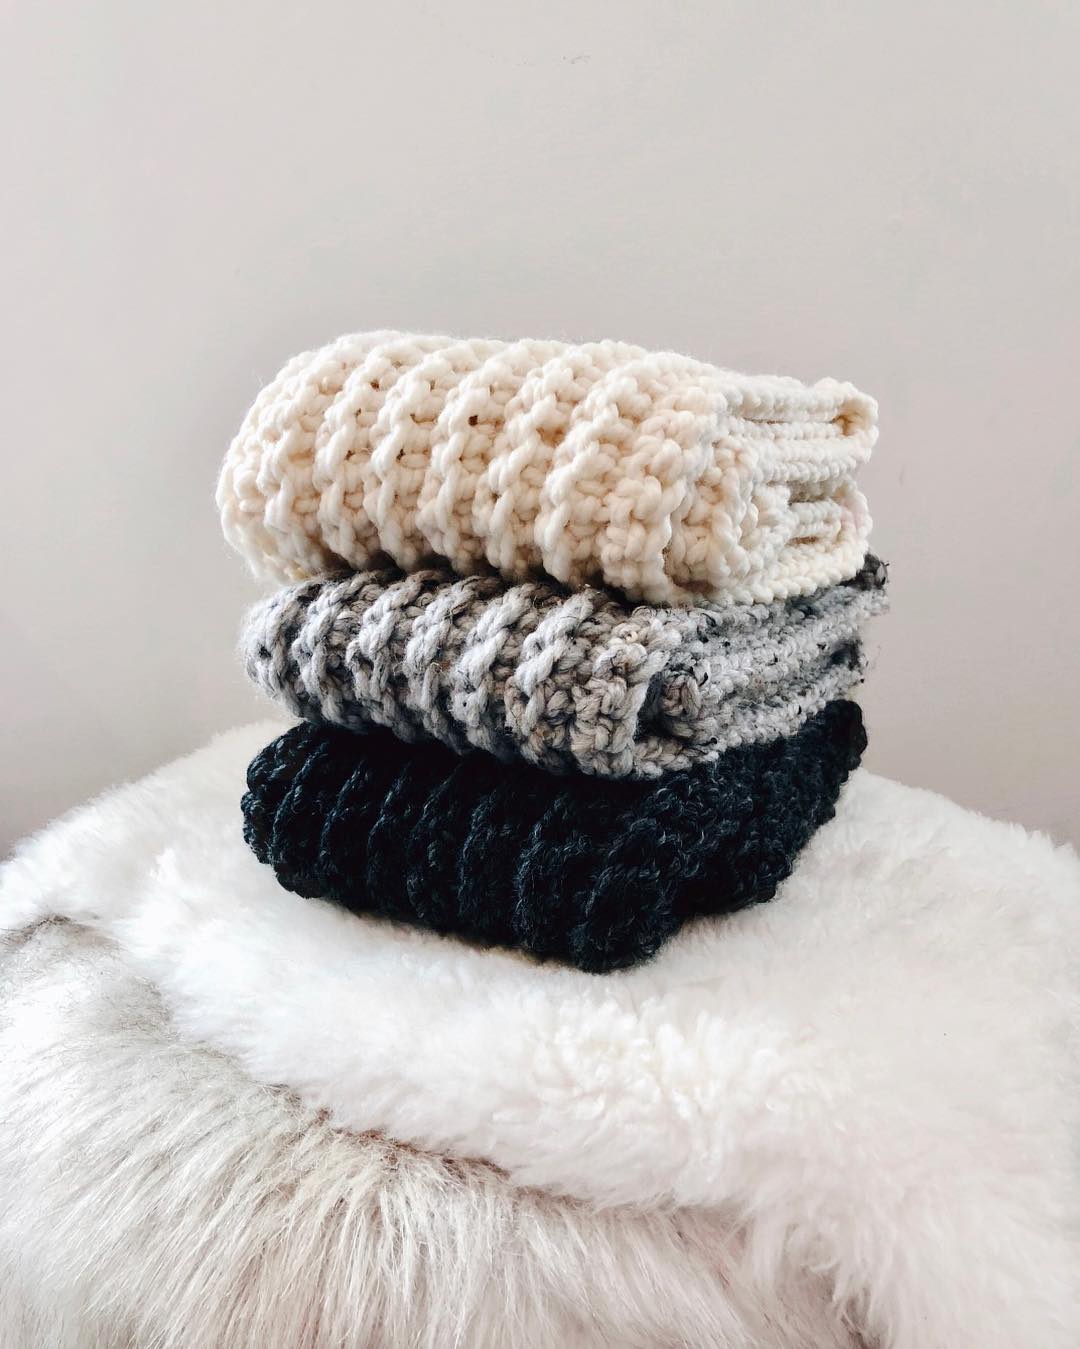 Scarves folded on white fur pillow. Photo by Instagram user @eikachickaknits